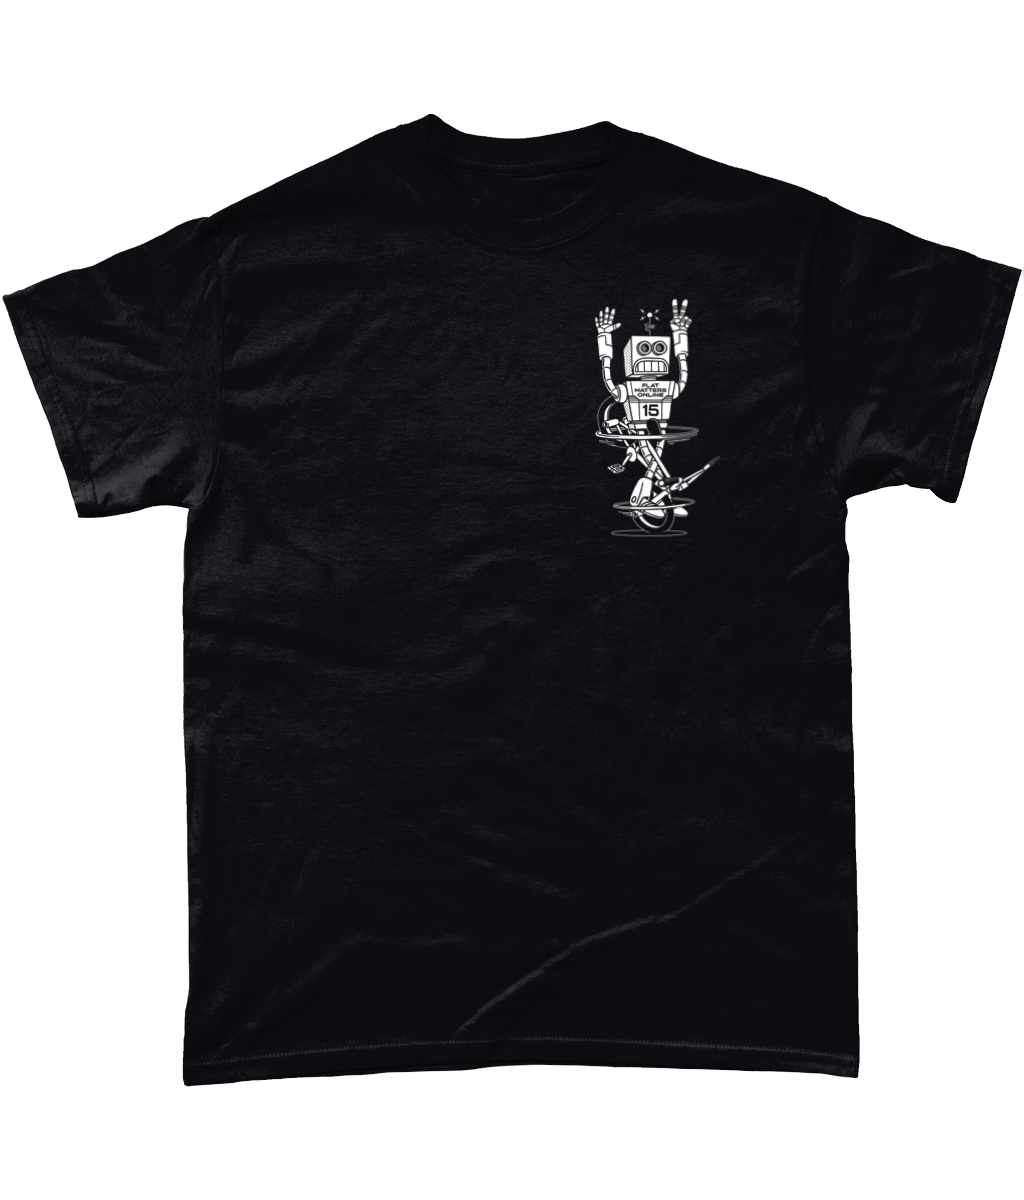 Flatmattersonline 15th Anniversary Series 1 - T-shirt - Black